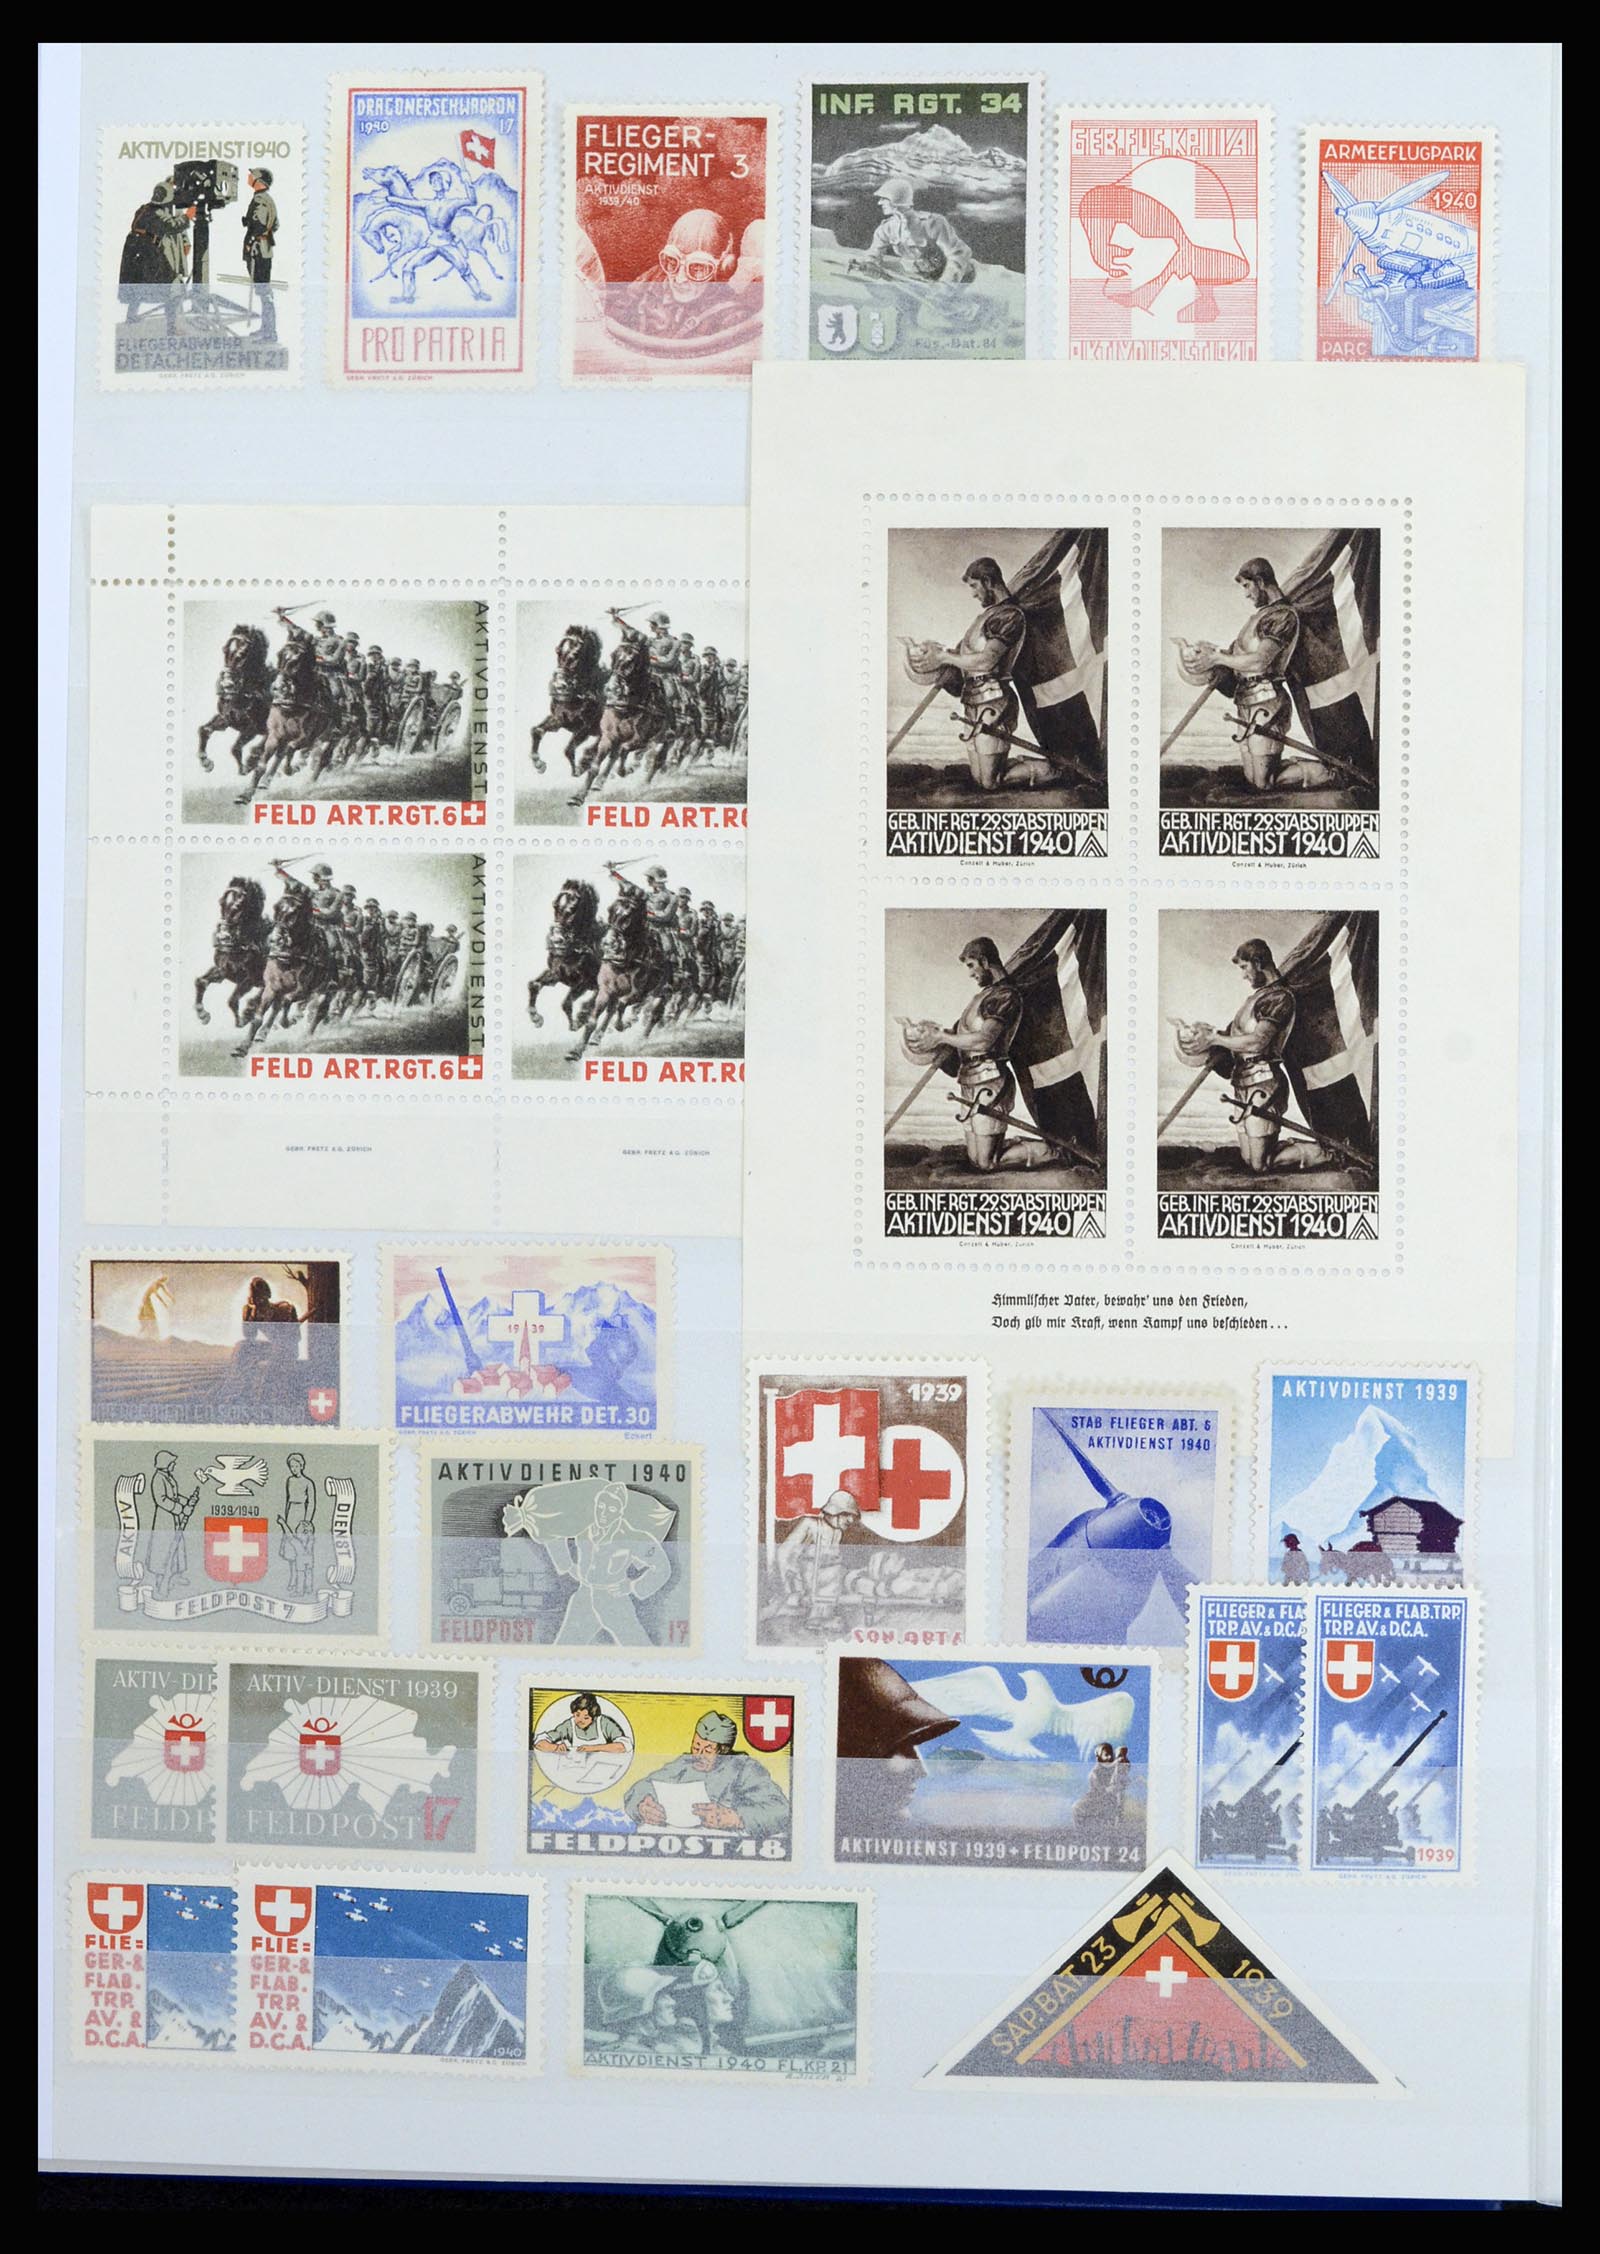 37149 010 - Stamp collection 37149 Switzerland soldier stamps 1914-1945.